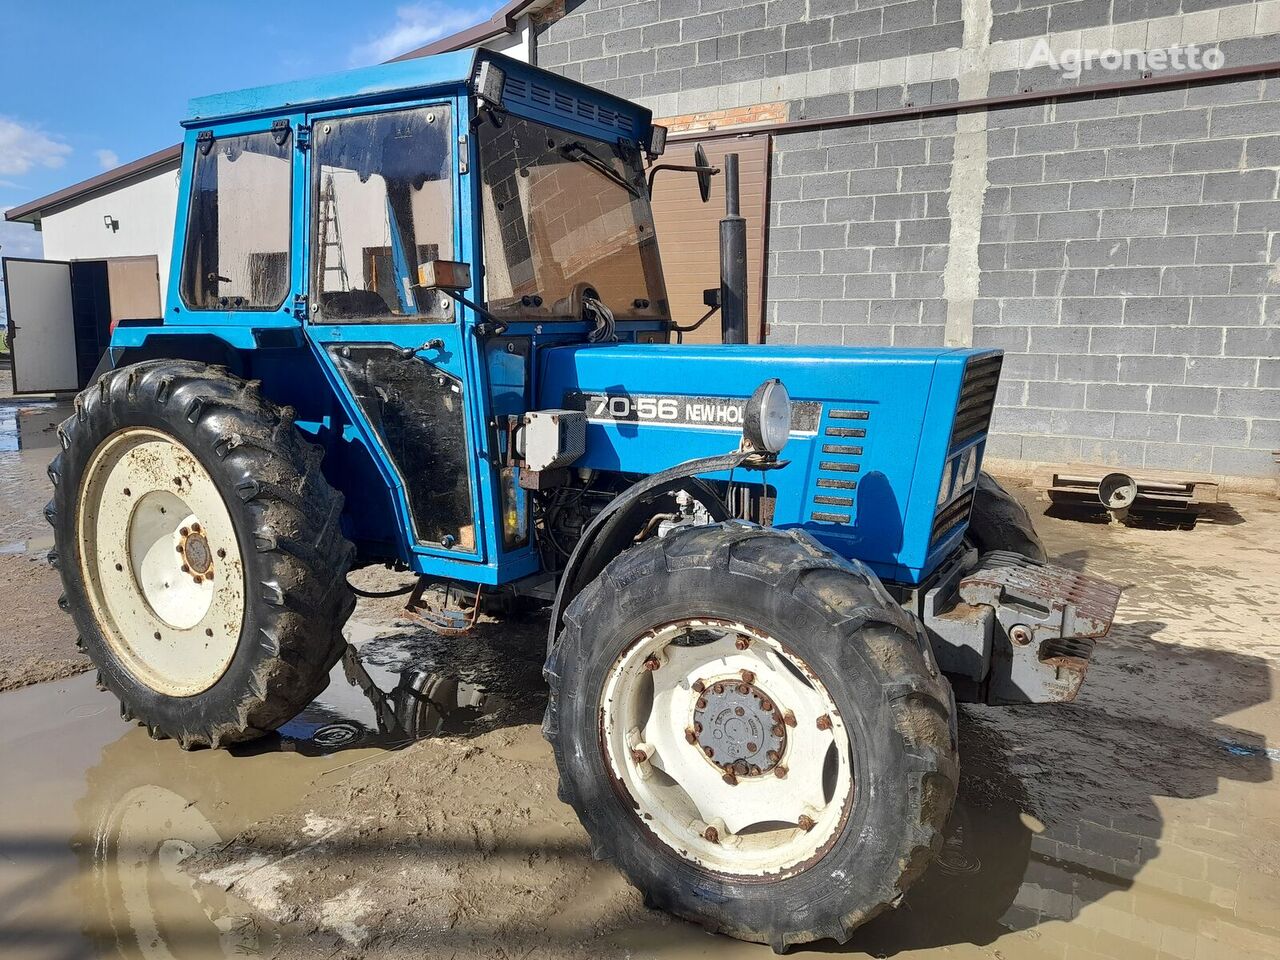 New Holland 70-56 wheel tractor